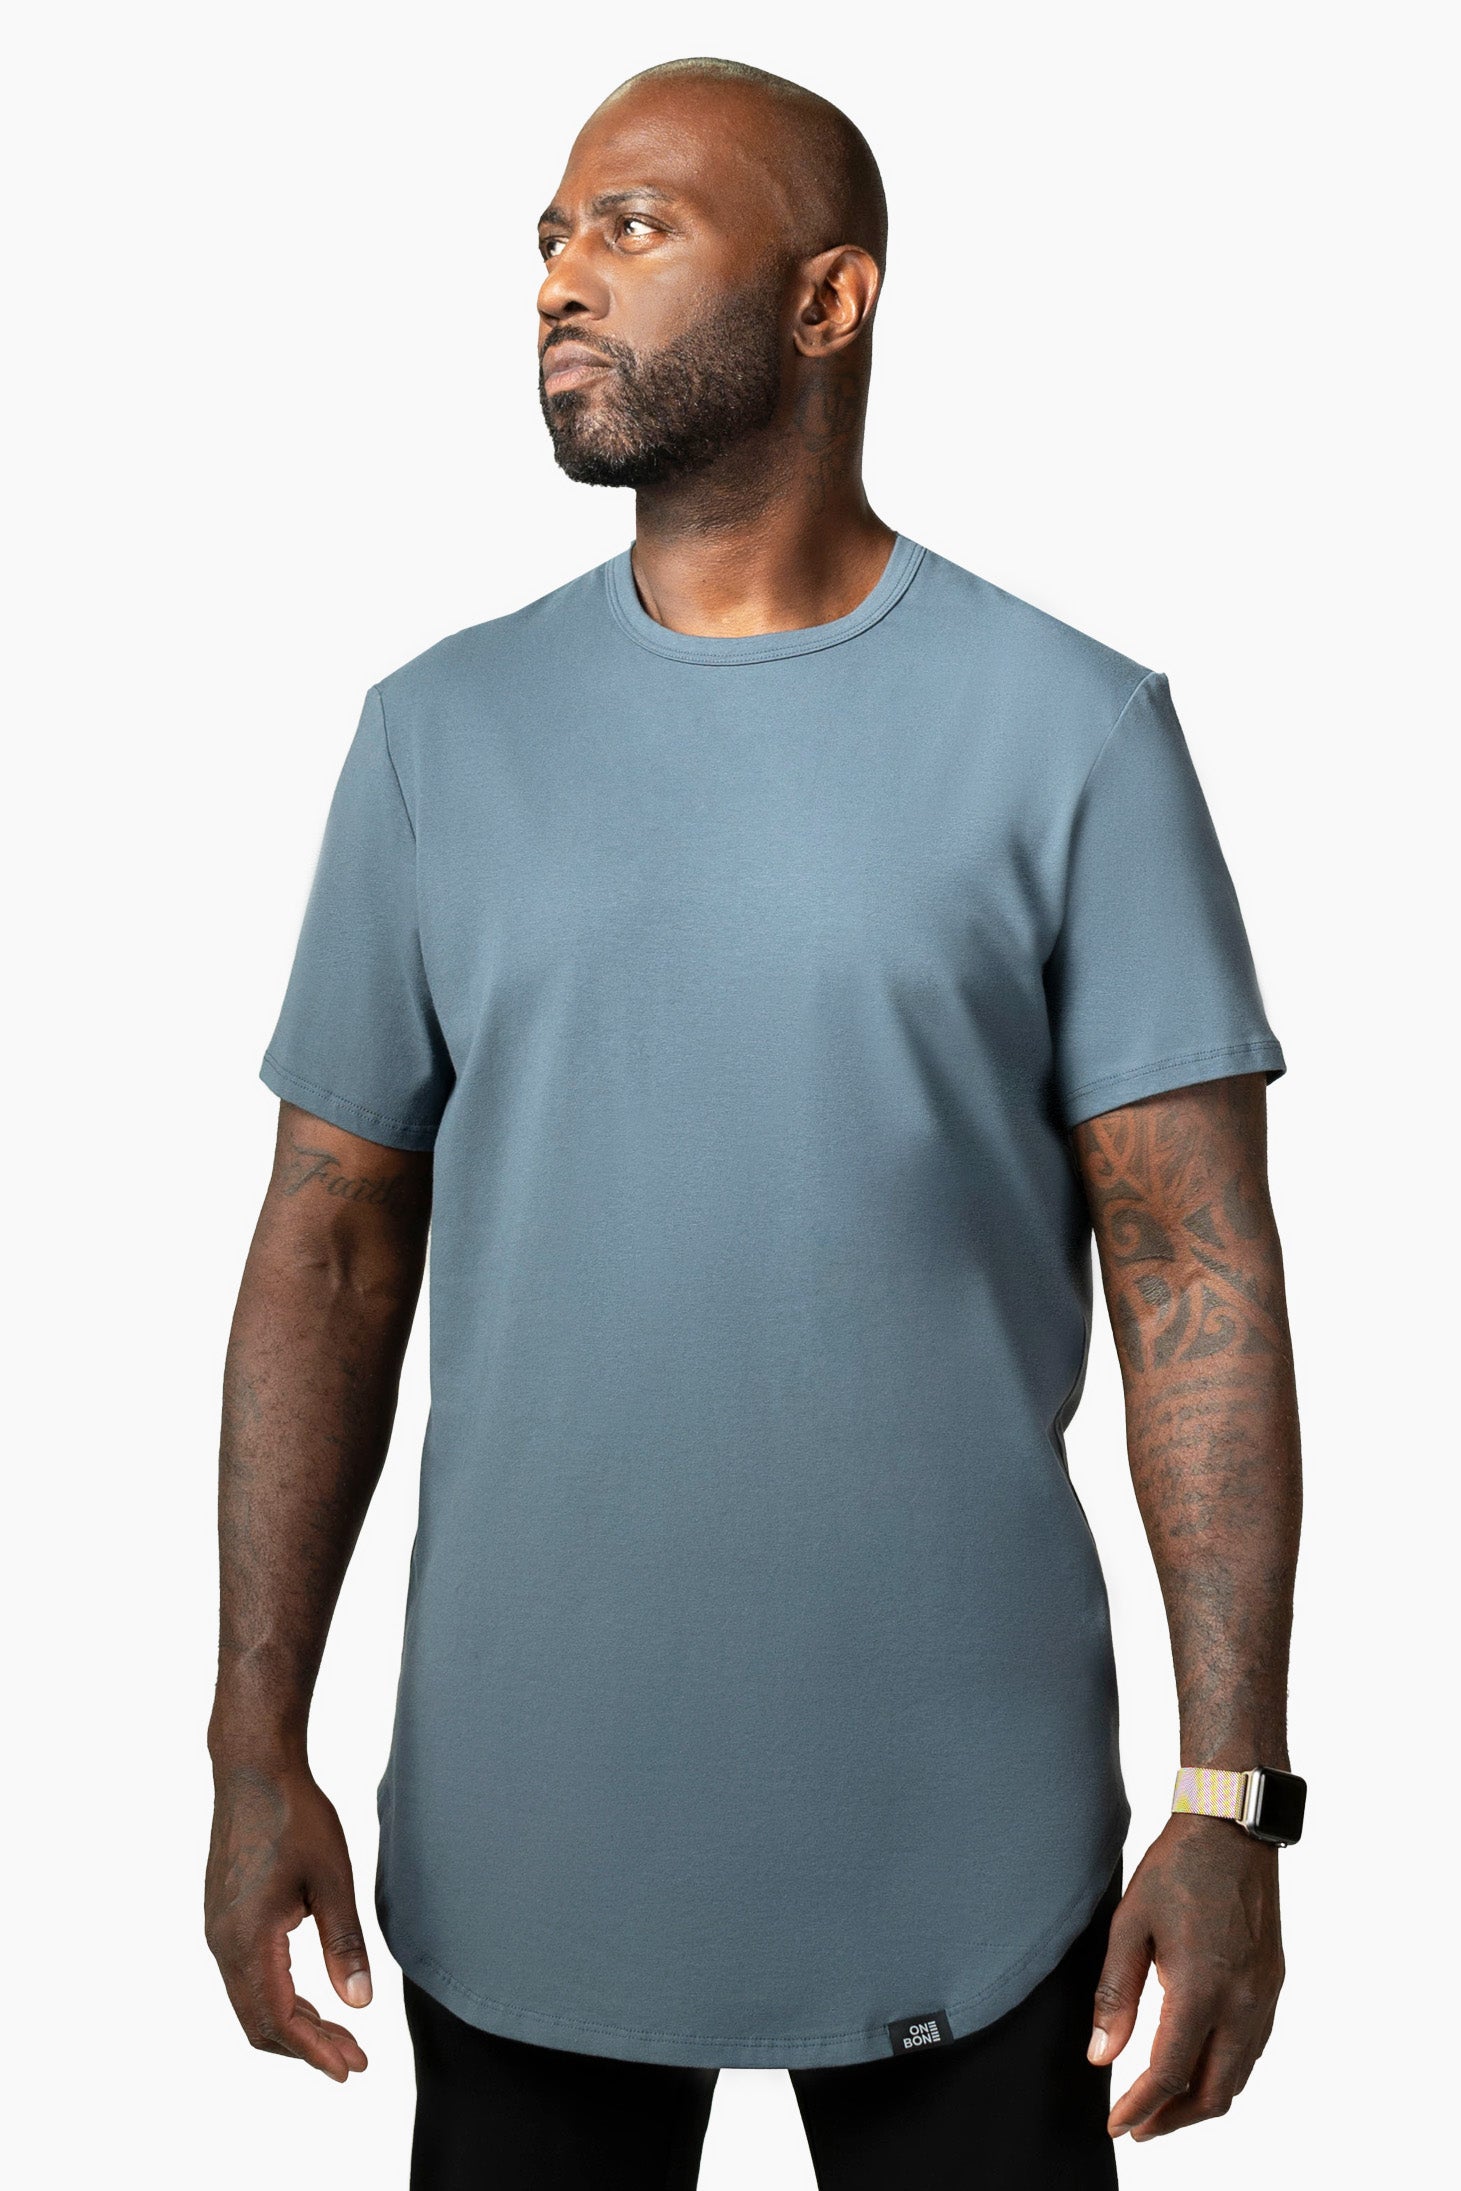 Scoop - T-Shirt - Slate Grey